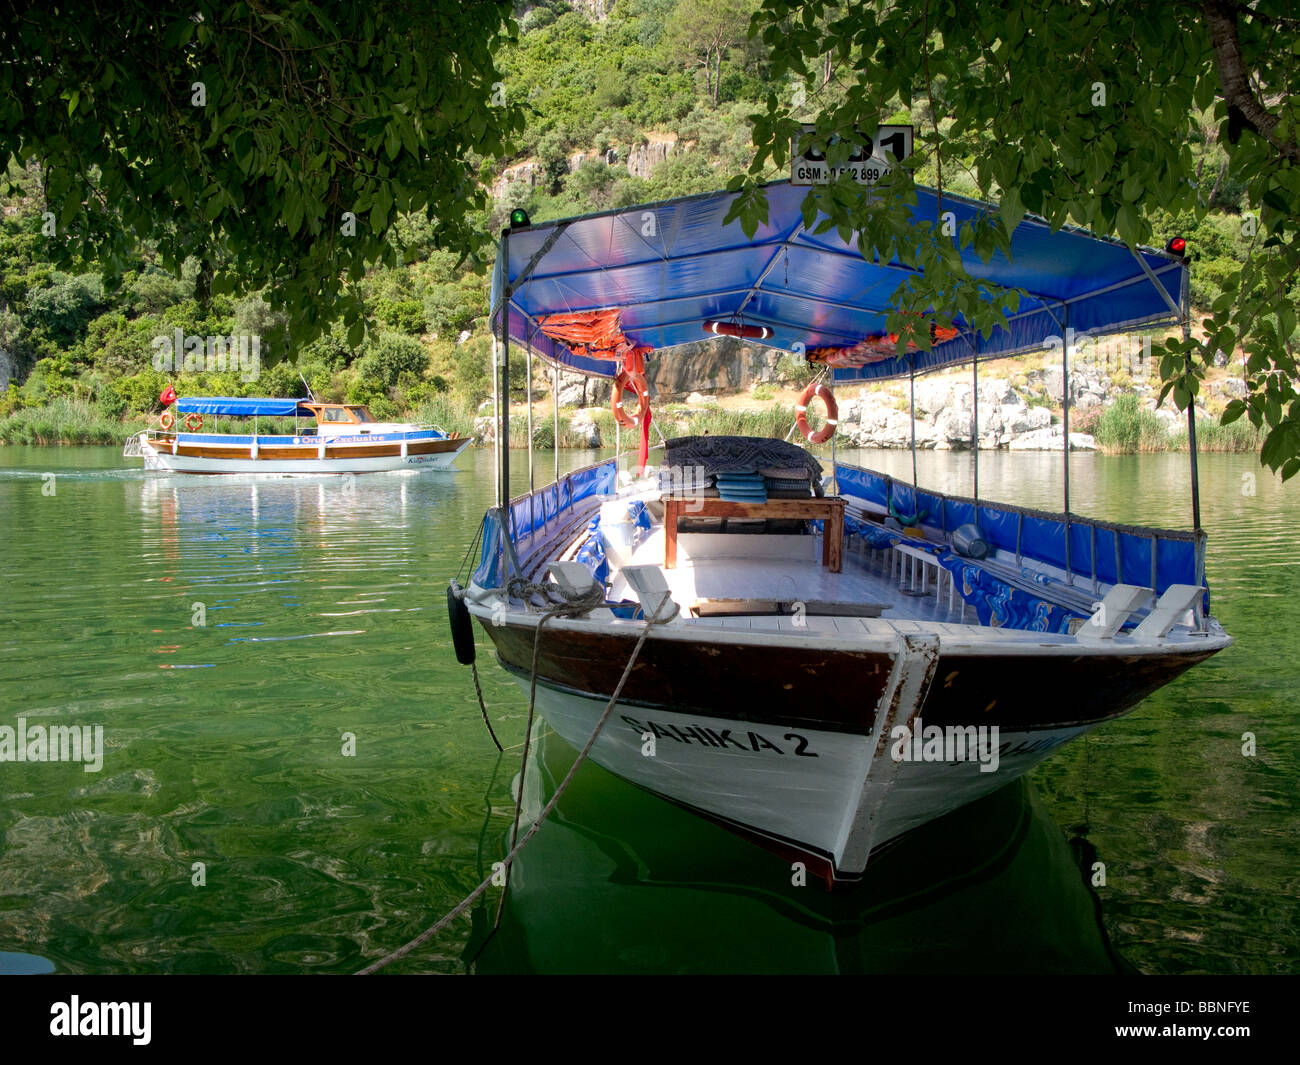 Pleasure Boat on the River at Dalyan, Turkey Stock Photo